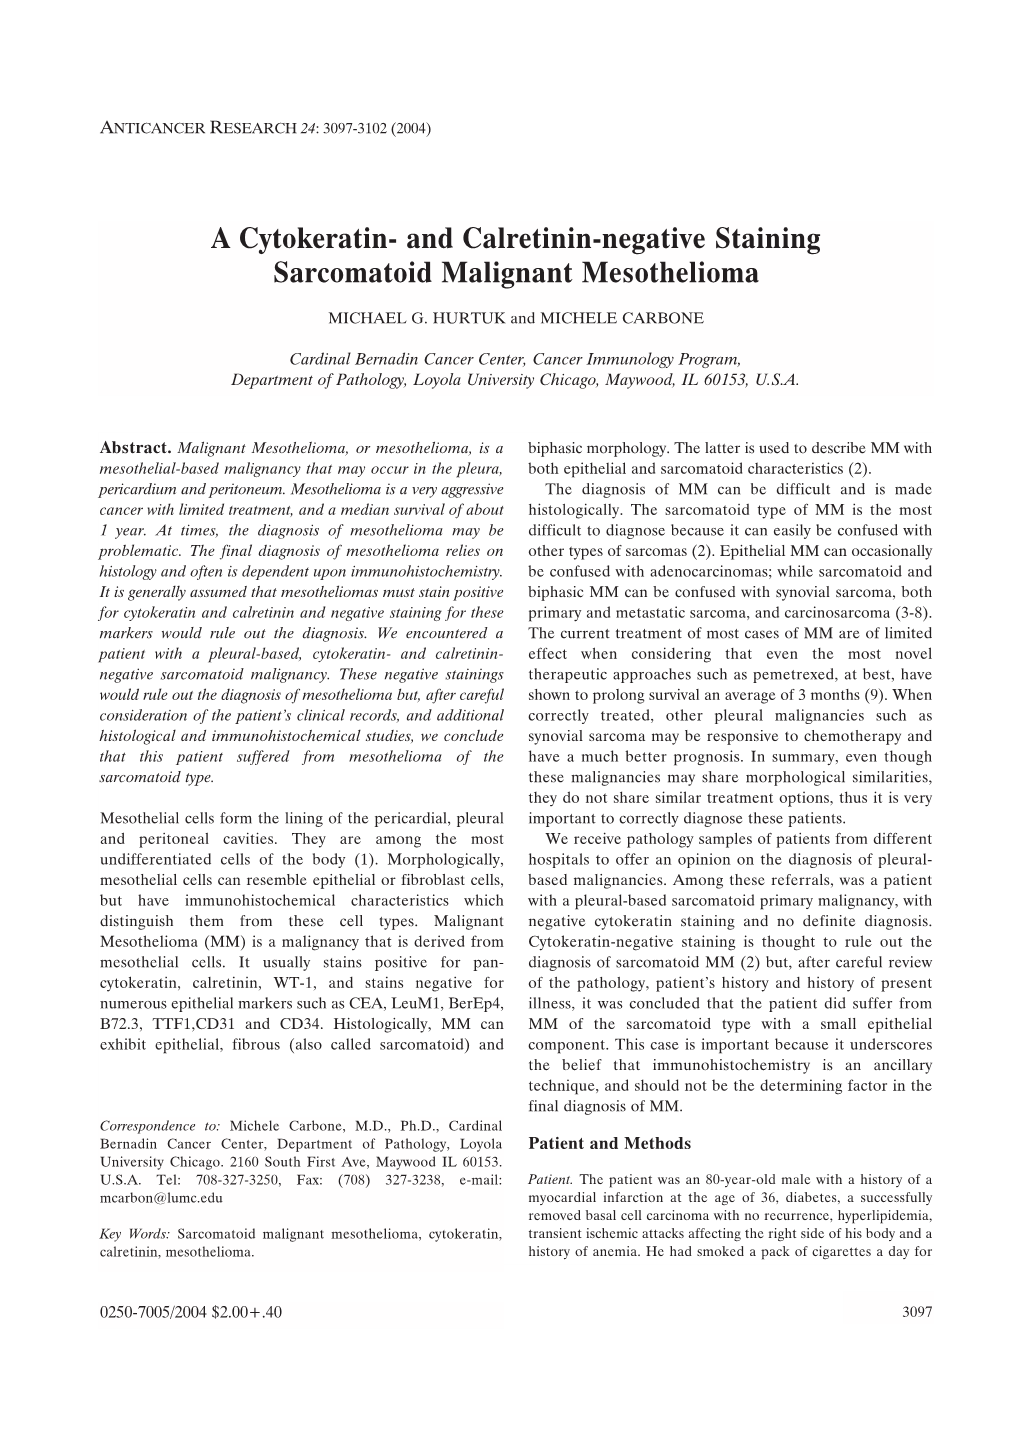 A Cytokeratin- and Calretinin-Negative Staining Sarcomatoid Malignant Mesothelioma